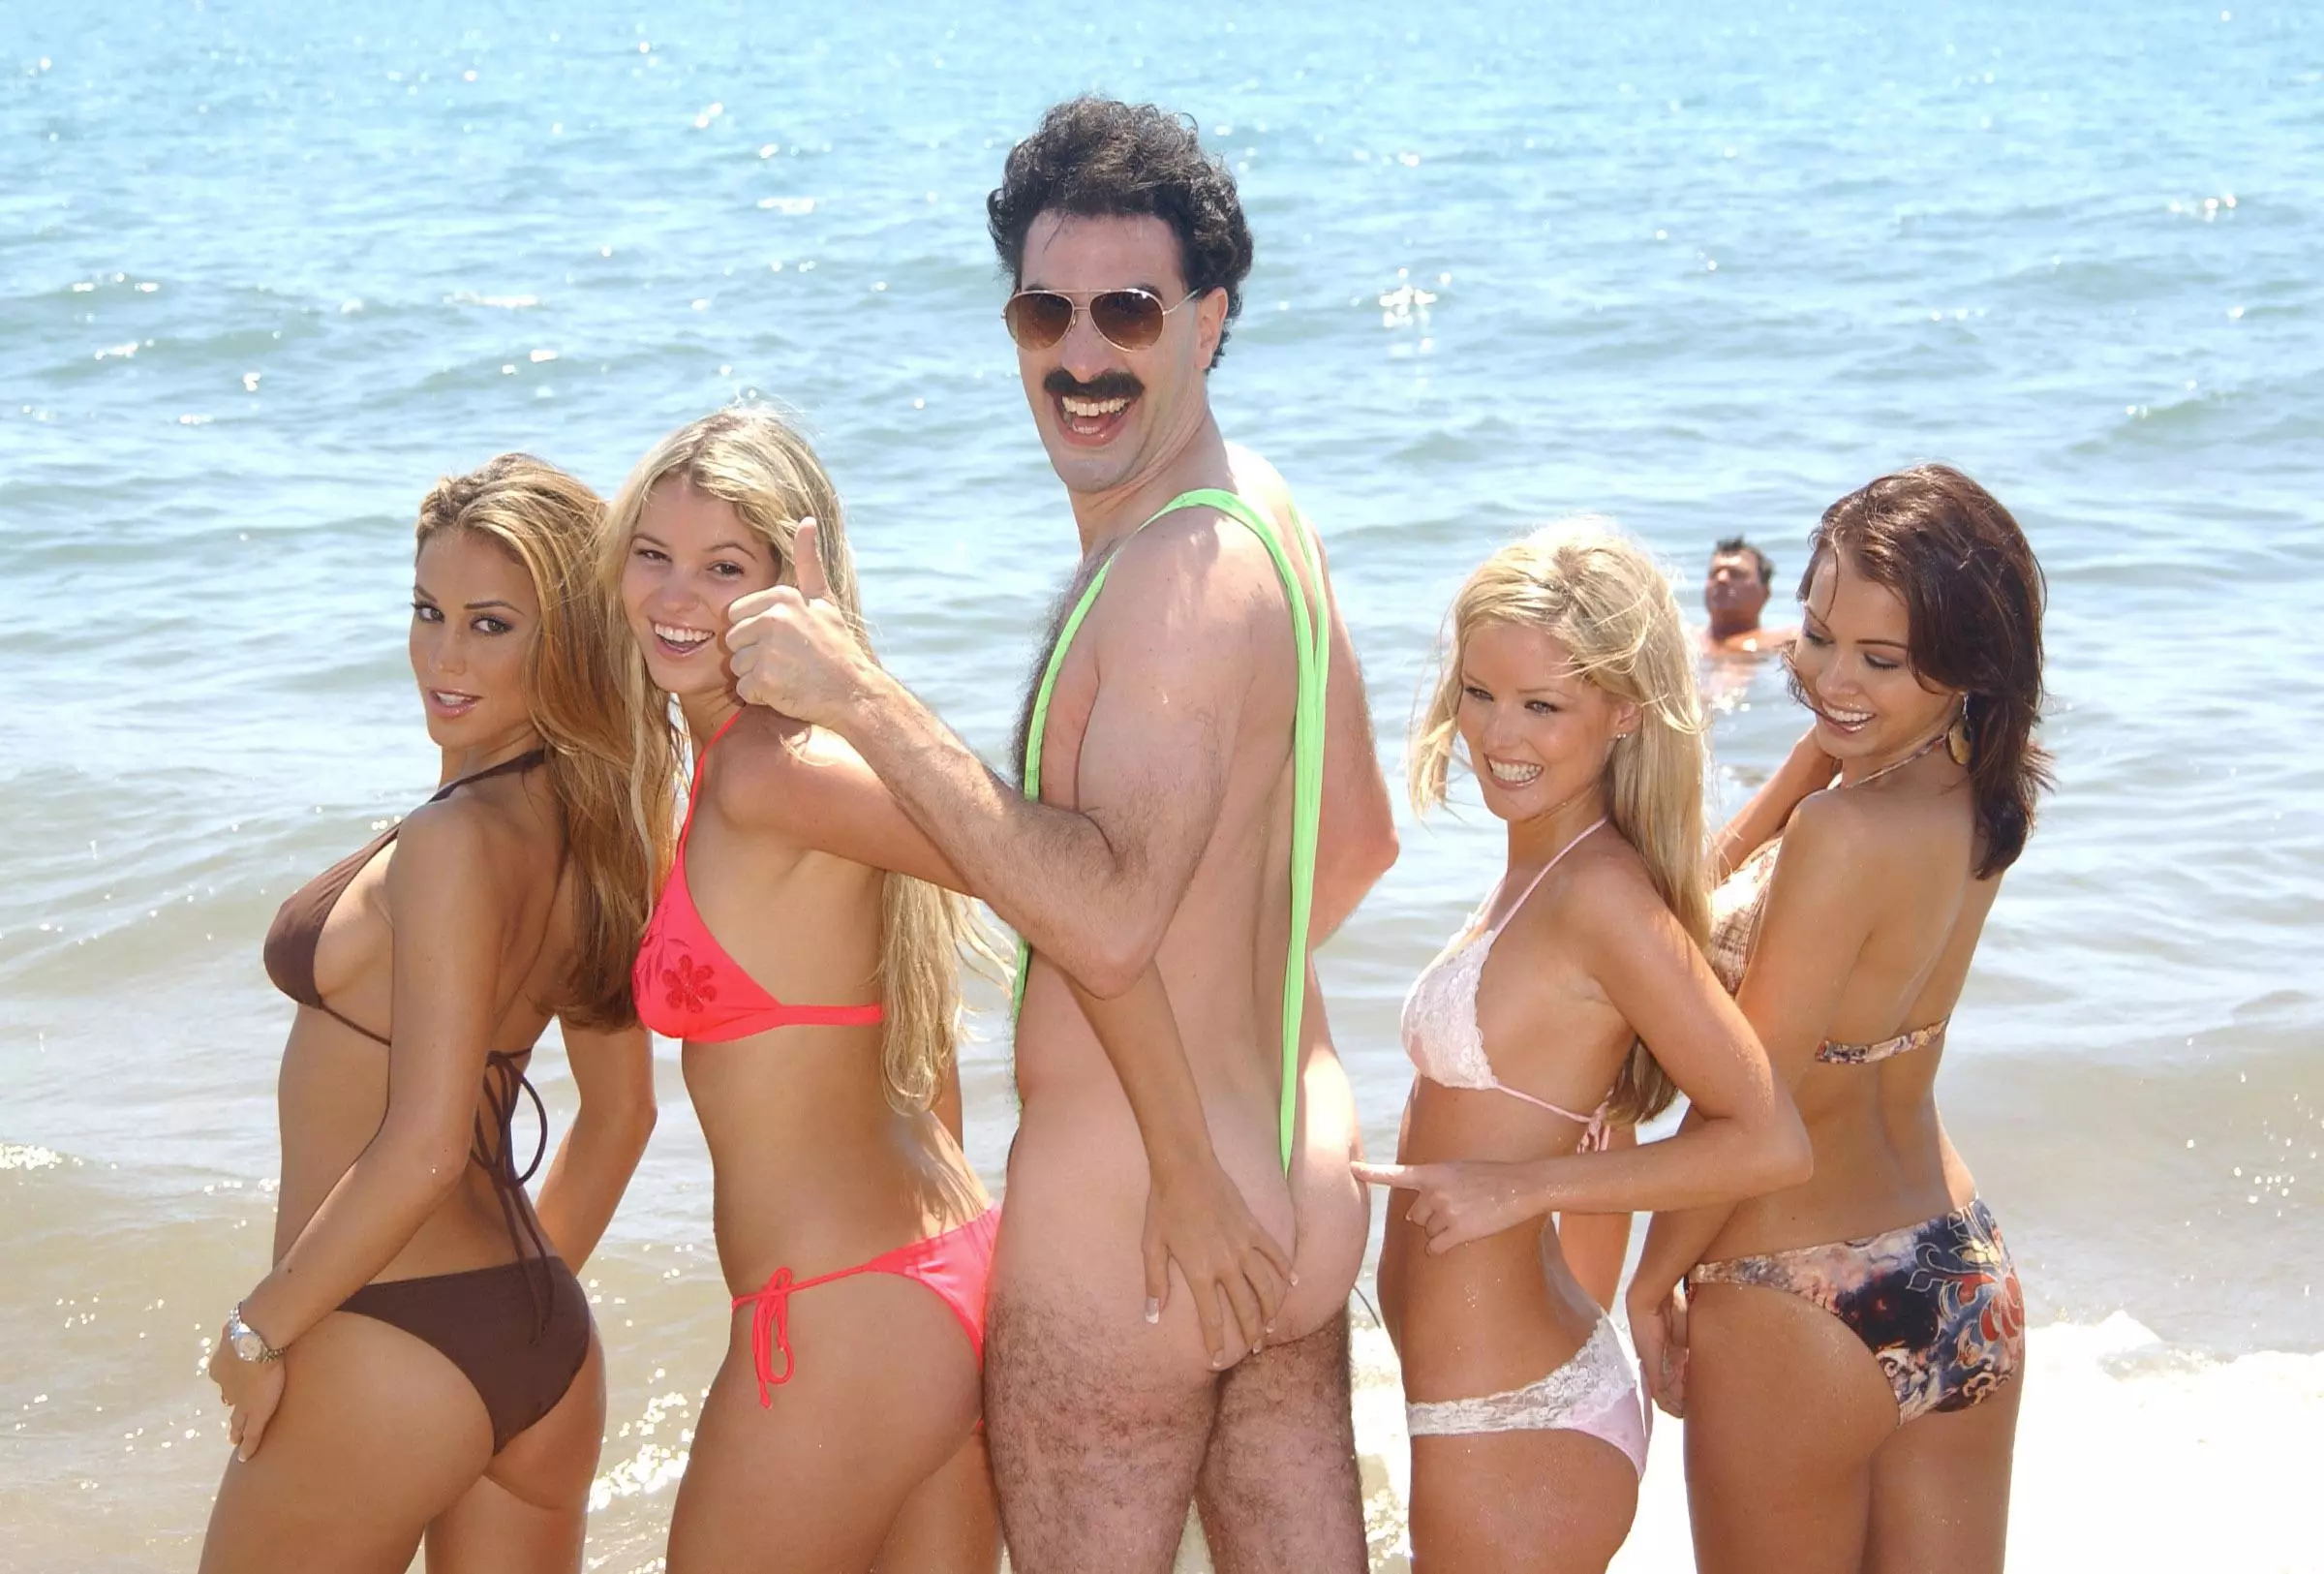 Sacha Baron Cohen played the highly entertaining character Borat.